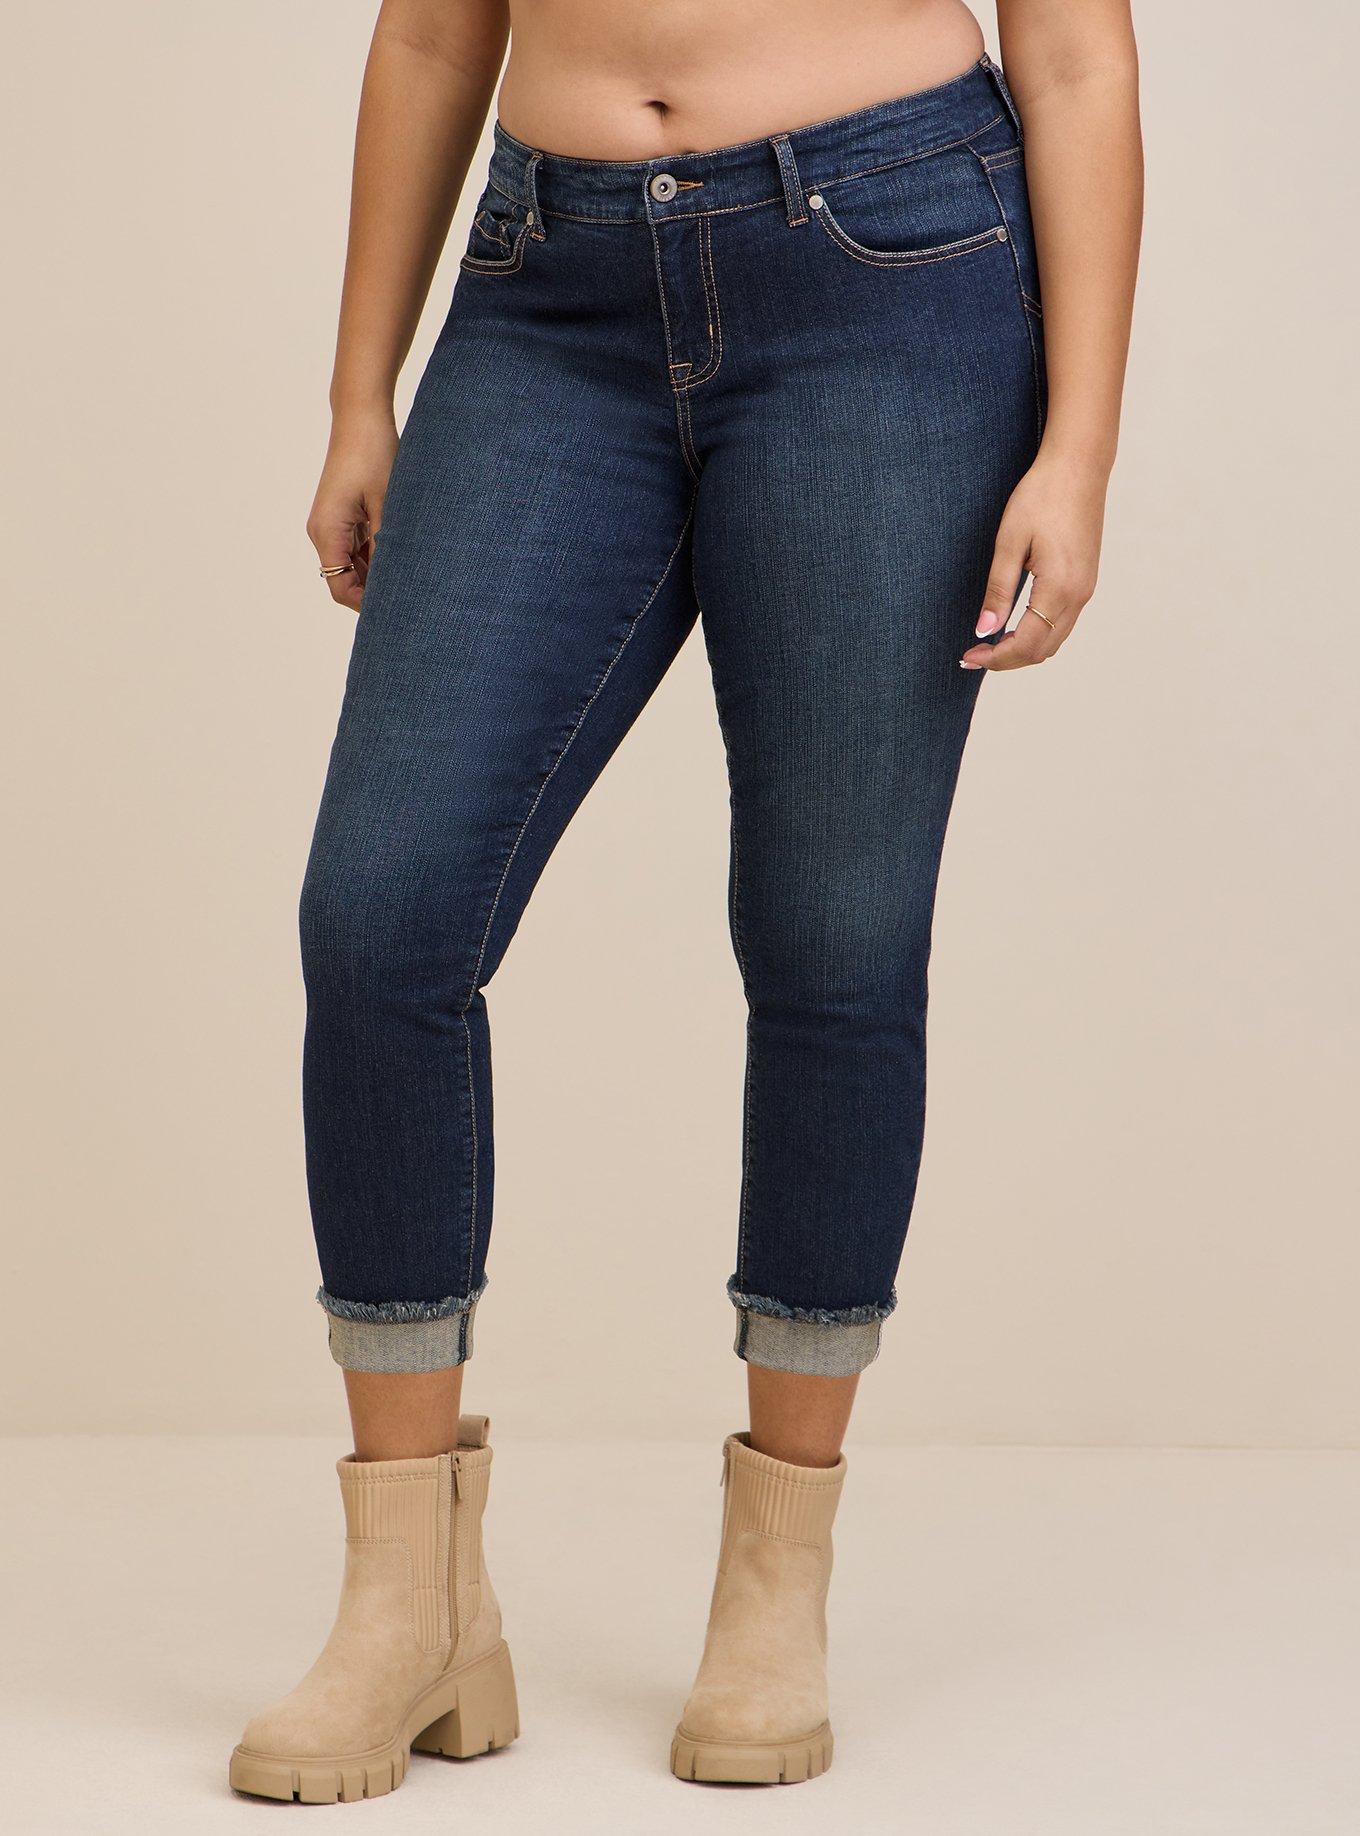 Buy the NWT Womens Blue Denim Dark Wash Soft Slimming Stretch Capri Jeans  Size 16